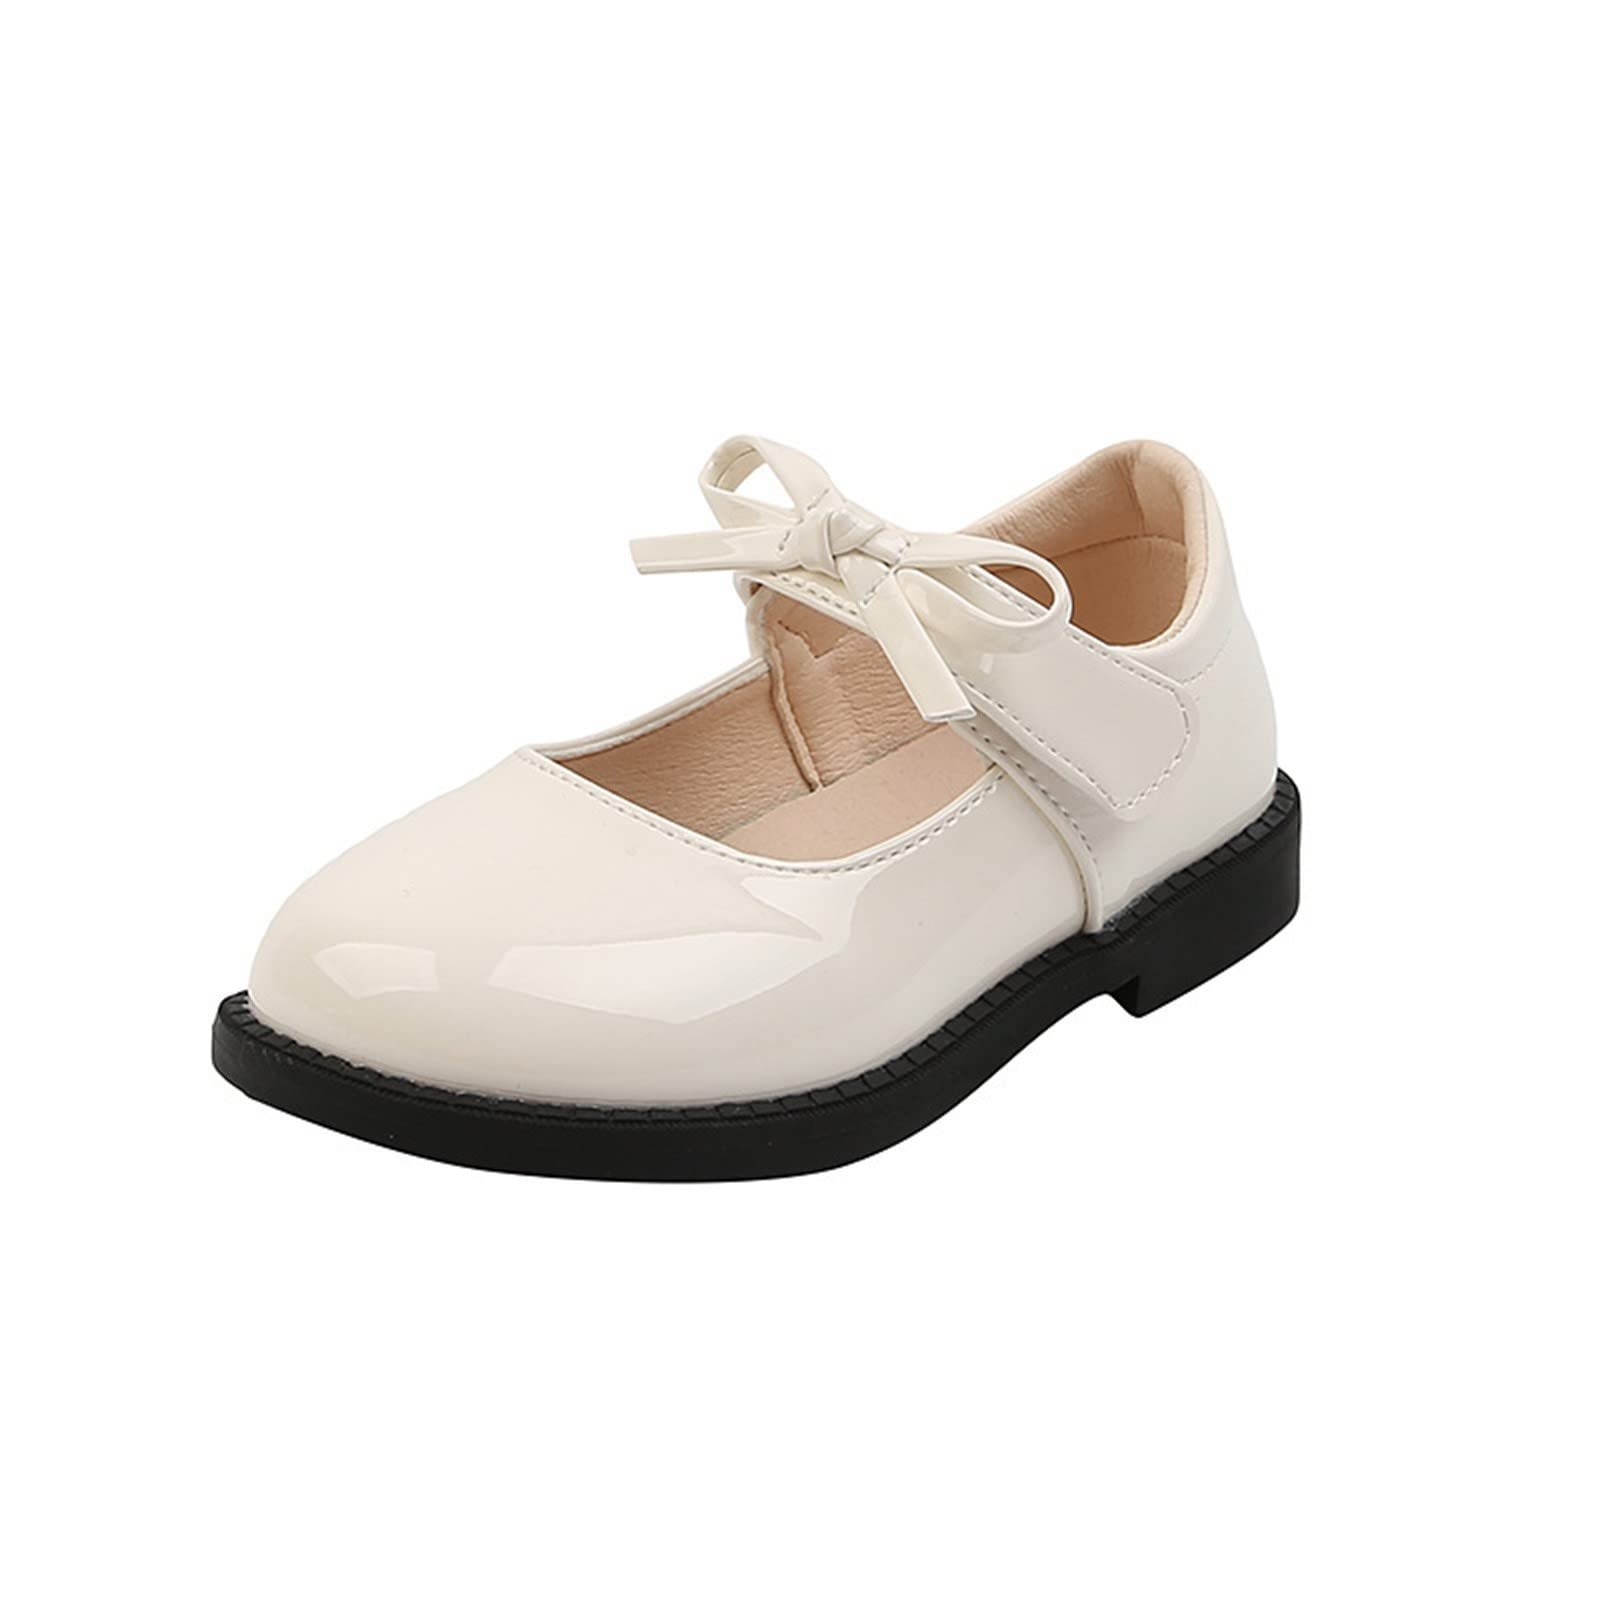 Bunny Slippers for Girls Size 1 Children Shoes Student Shoes Single Shoes Children Kids Slippers for Girls Memory Foam